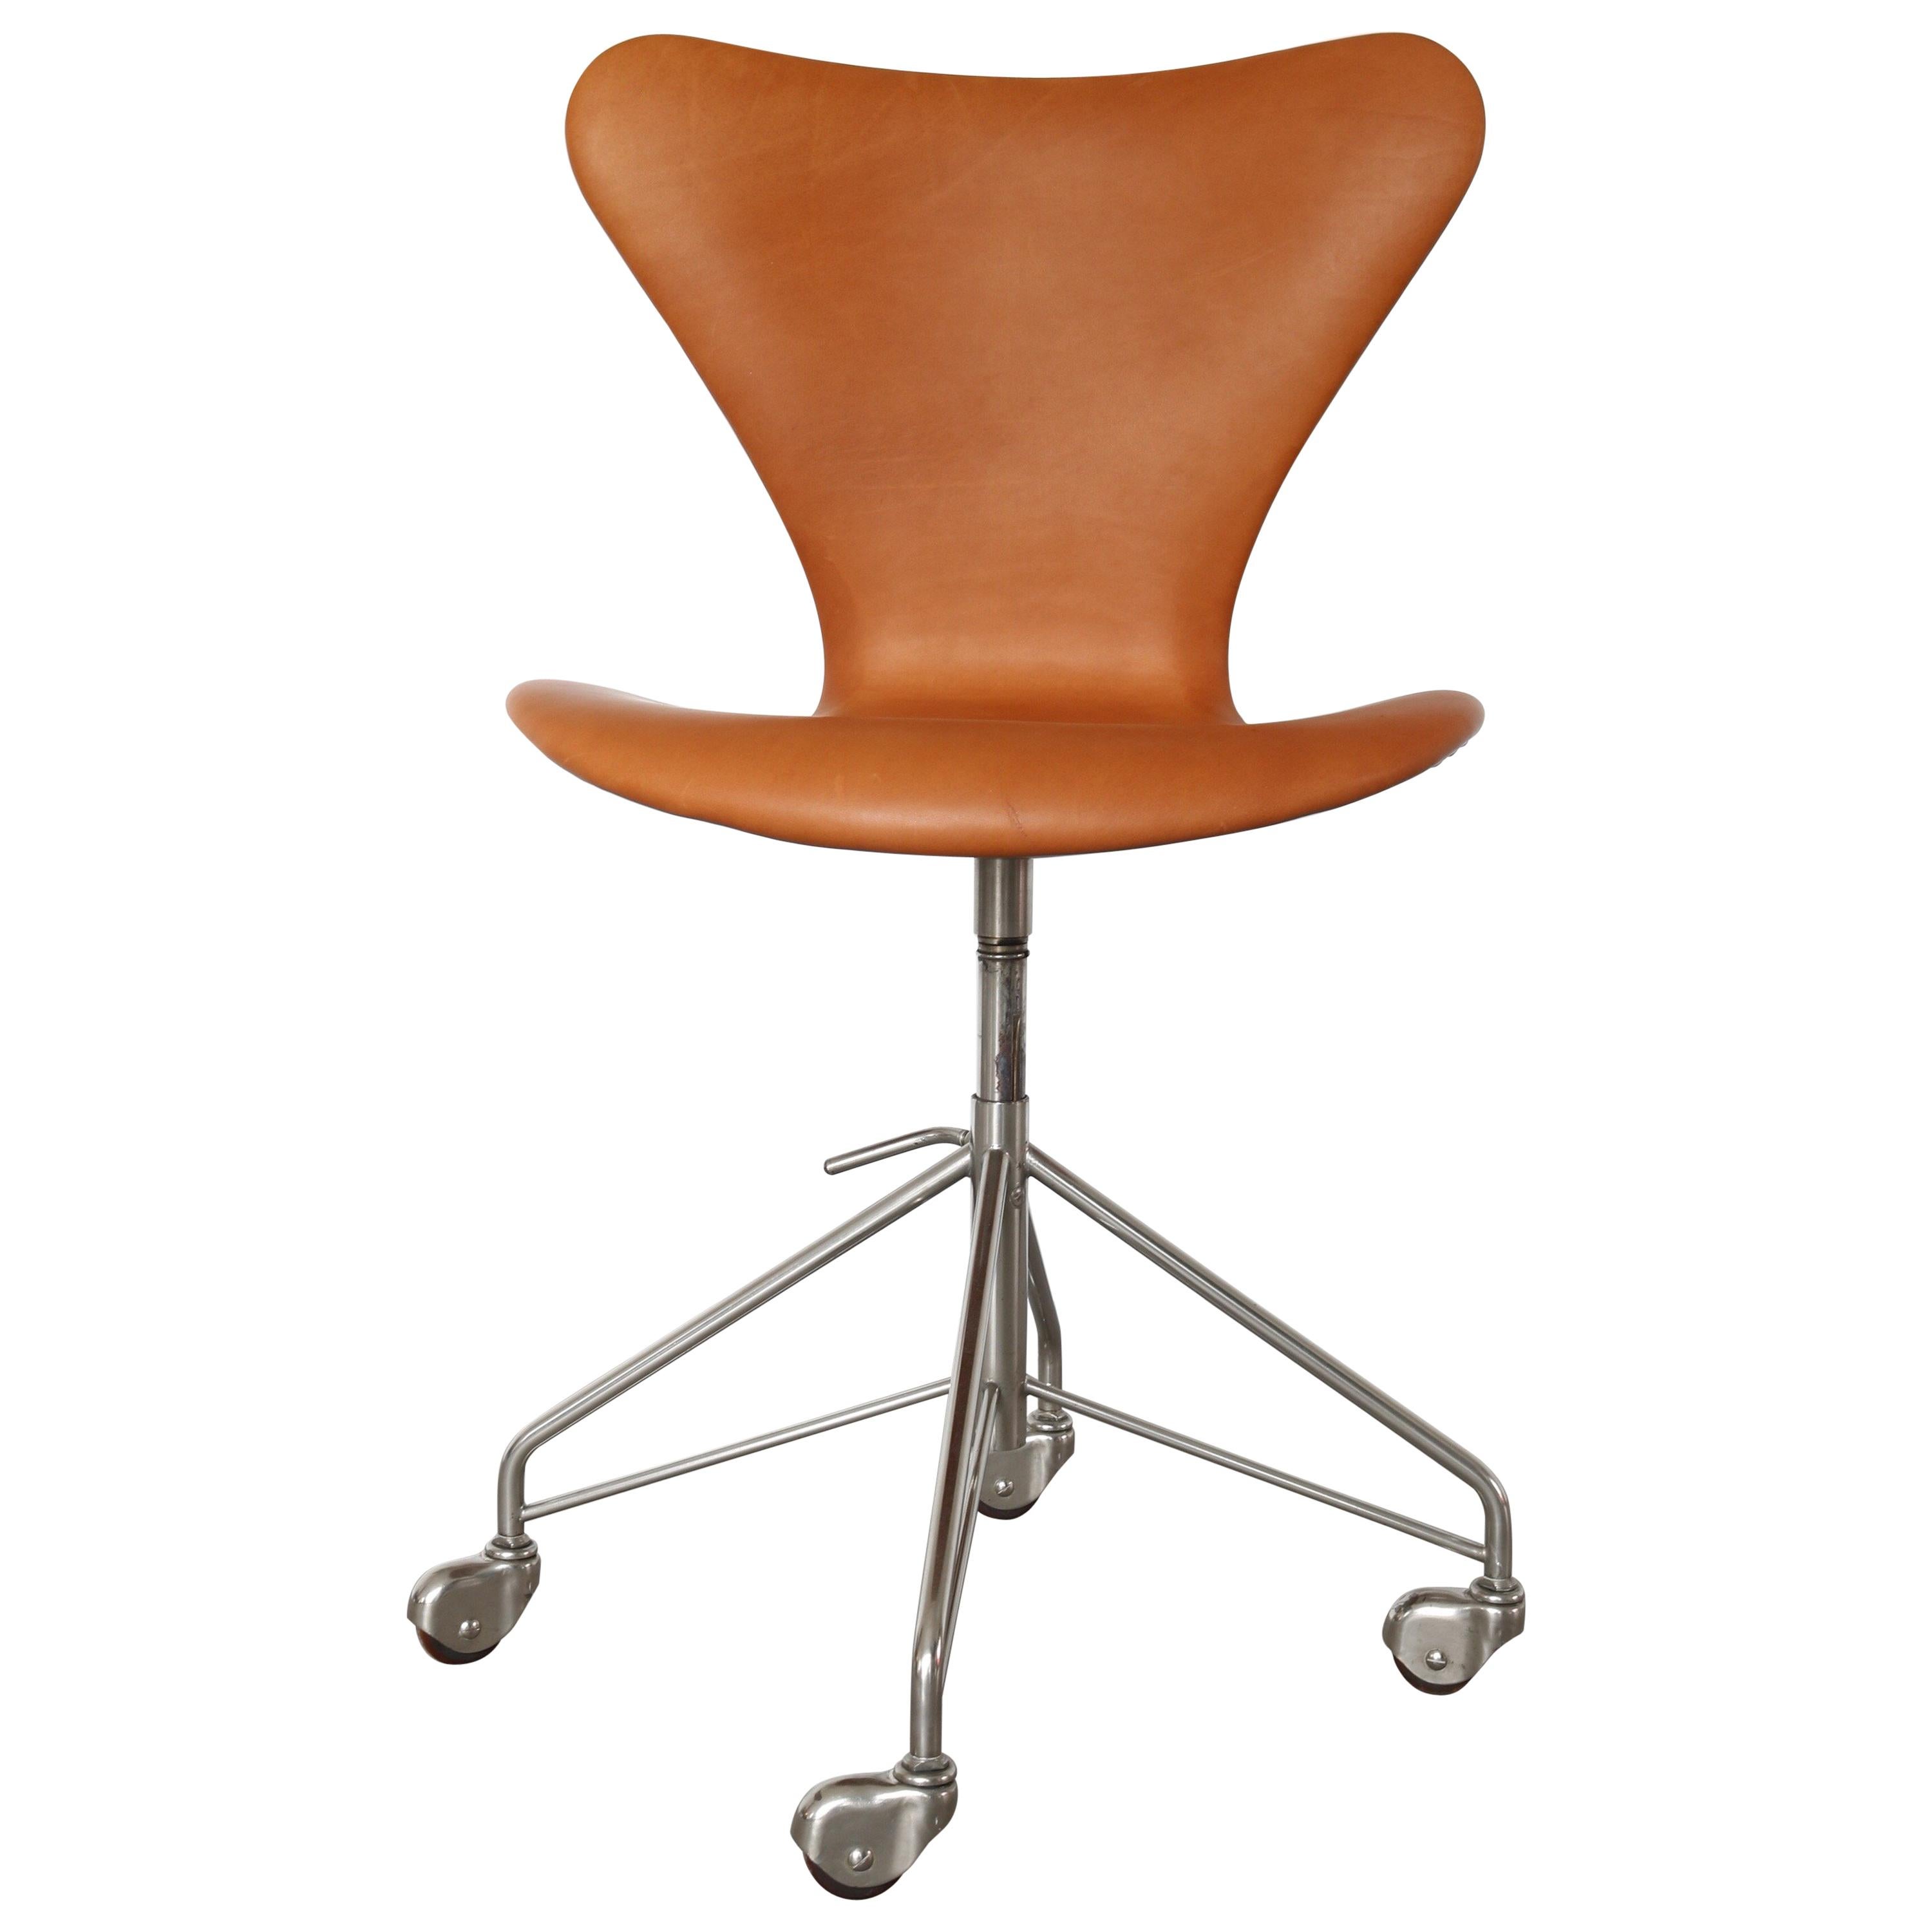 Arne Jacobsen Office Chair Model 3117 Cognac Leather by Fritz Hansen in Denmark